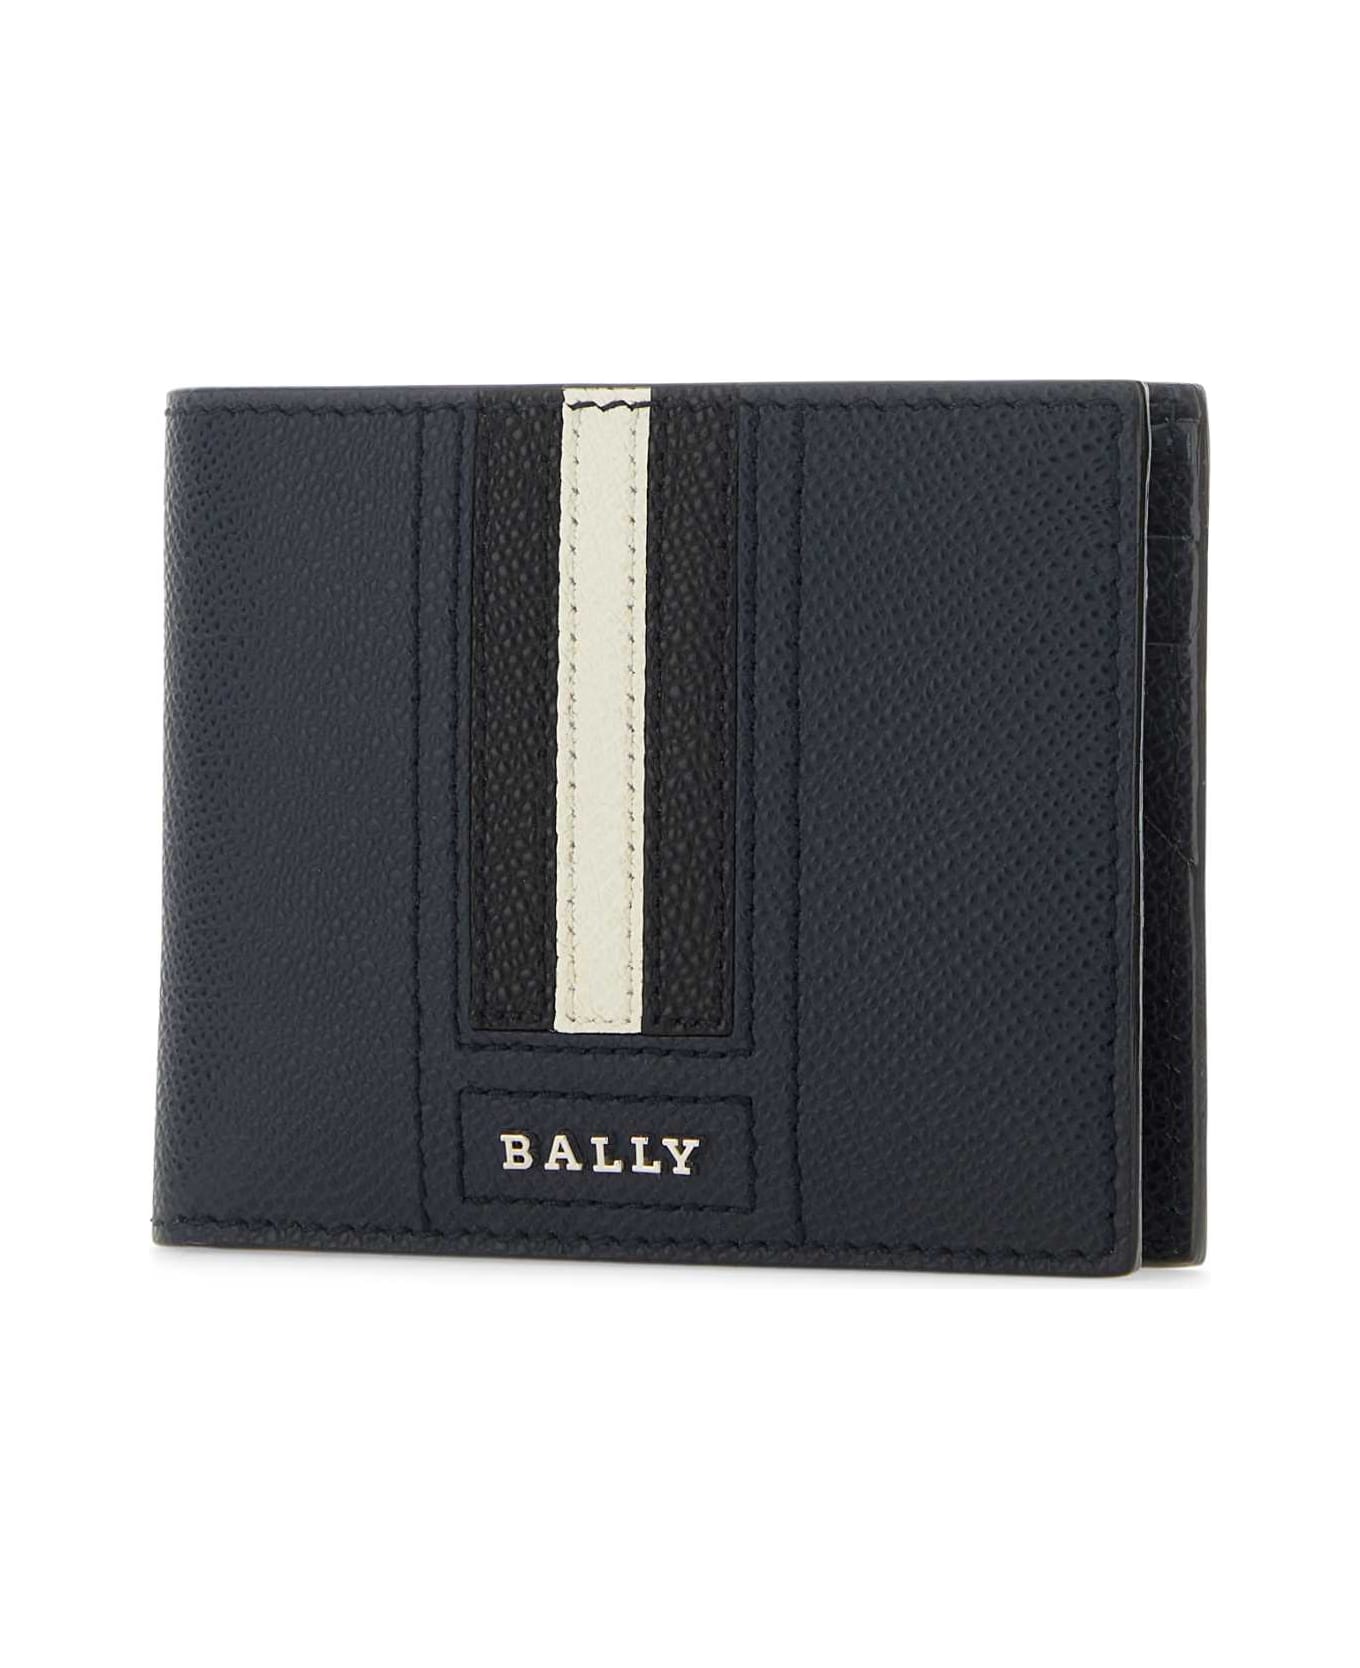 Bally Navy Blue Leather Wallet - NEWBLUE